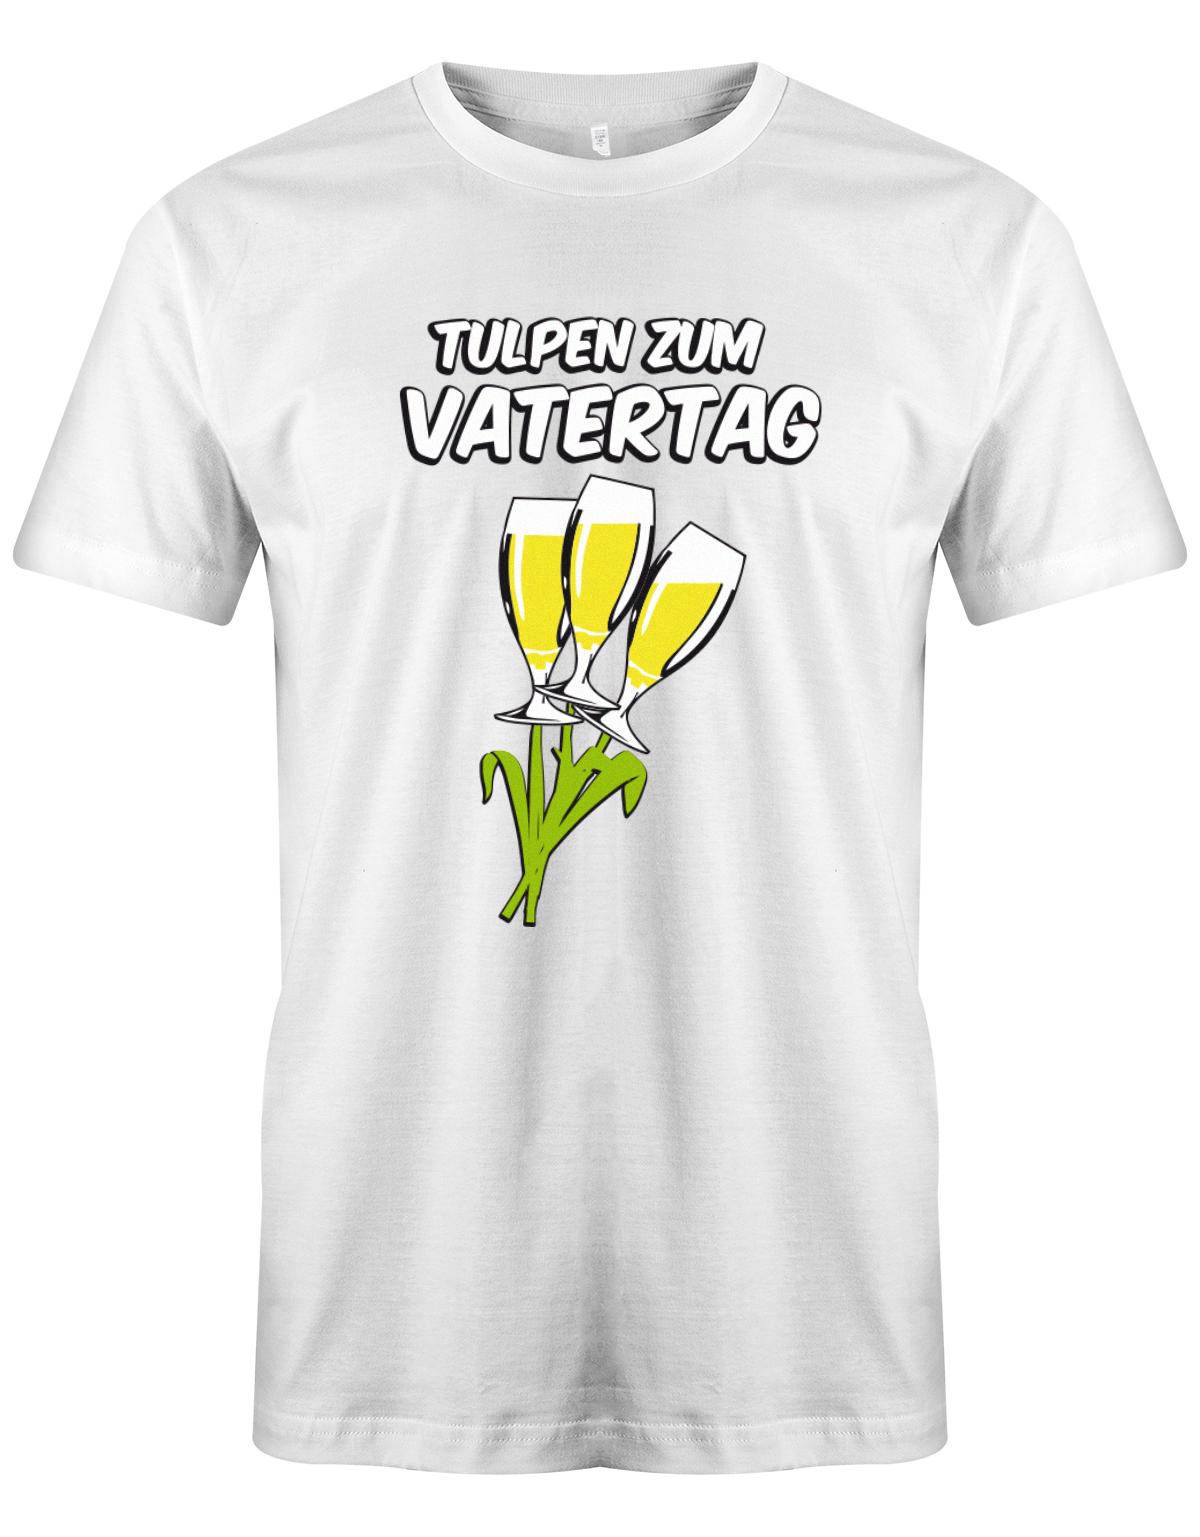 Tulpen-zum-Vatertag-Herren-Shirt-Weiss